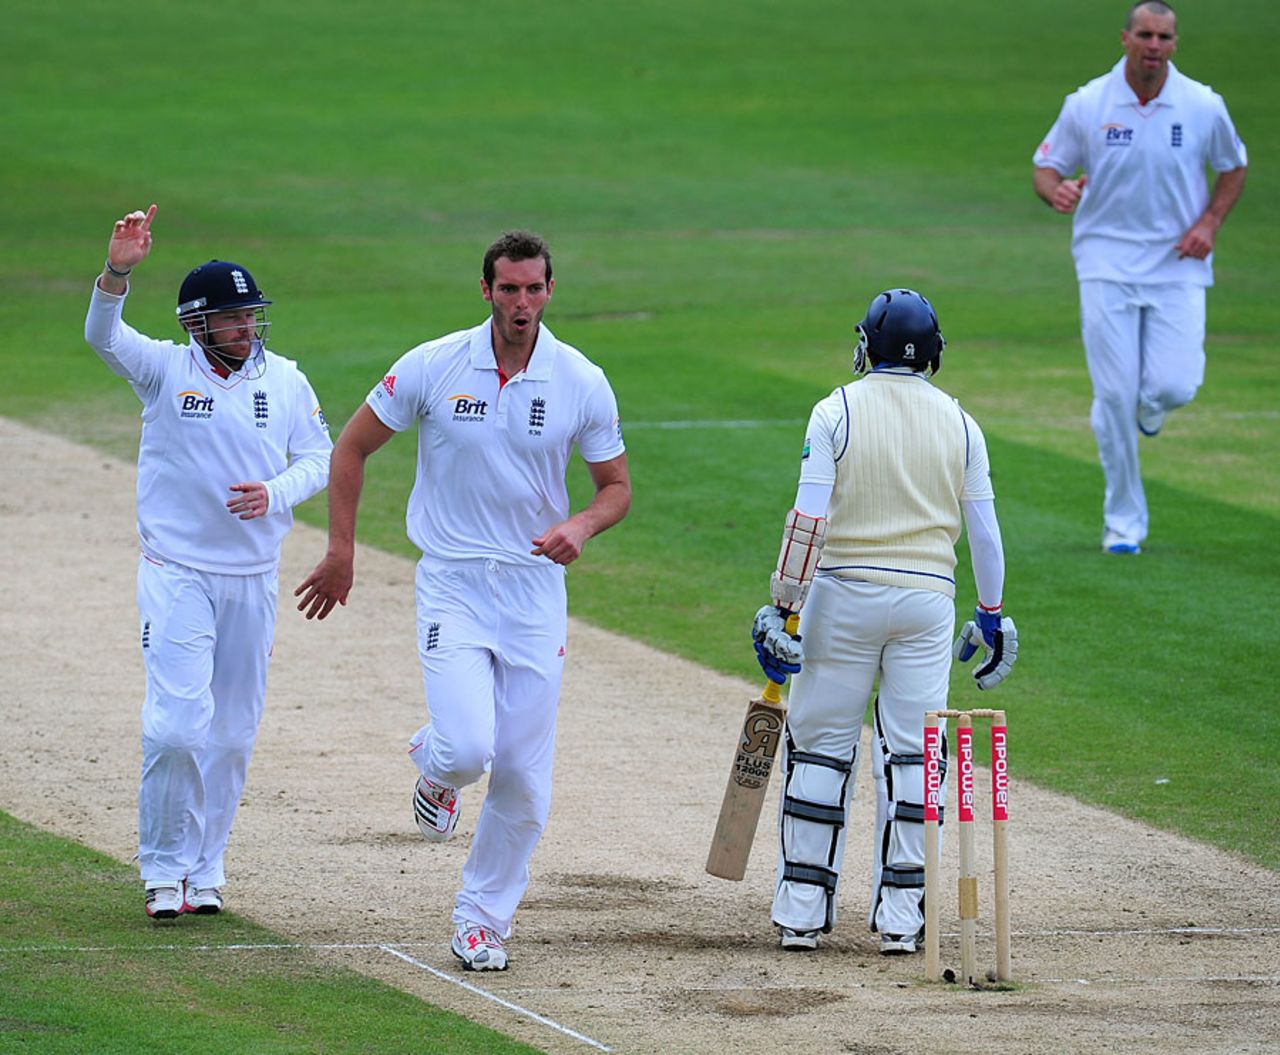 Chris Tremlett took a return catch to remove Tillakaratne Dilshan, England v Sri Lanka, 1st Test, Cardiff, 5th day, May 30, 2011